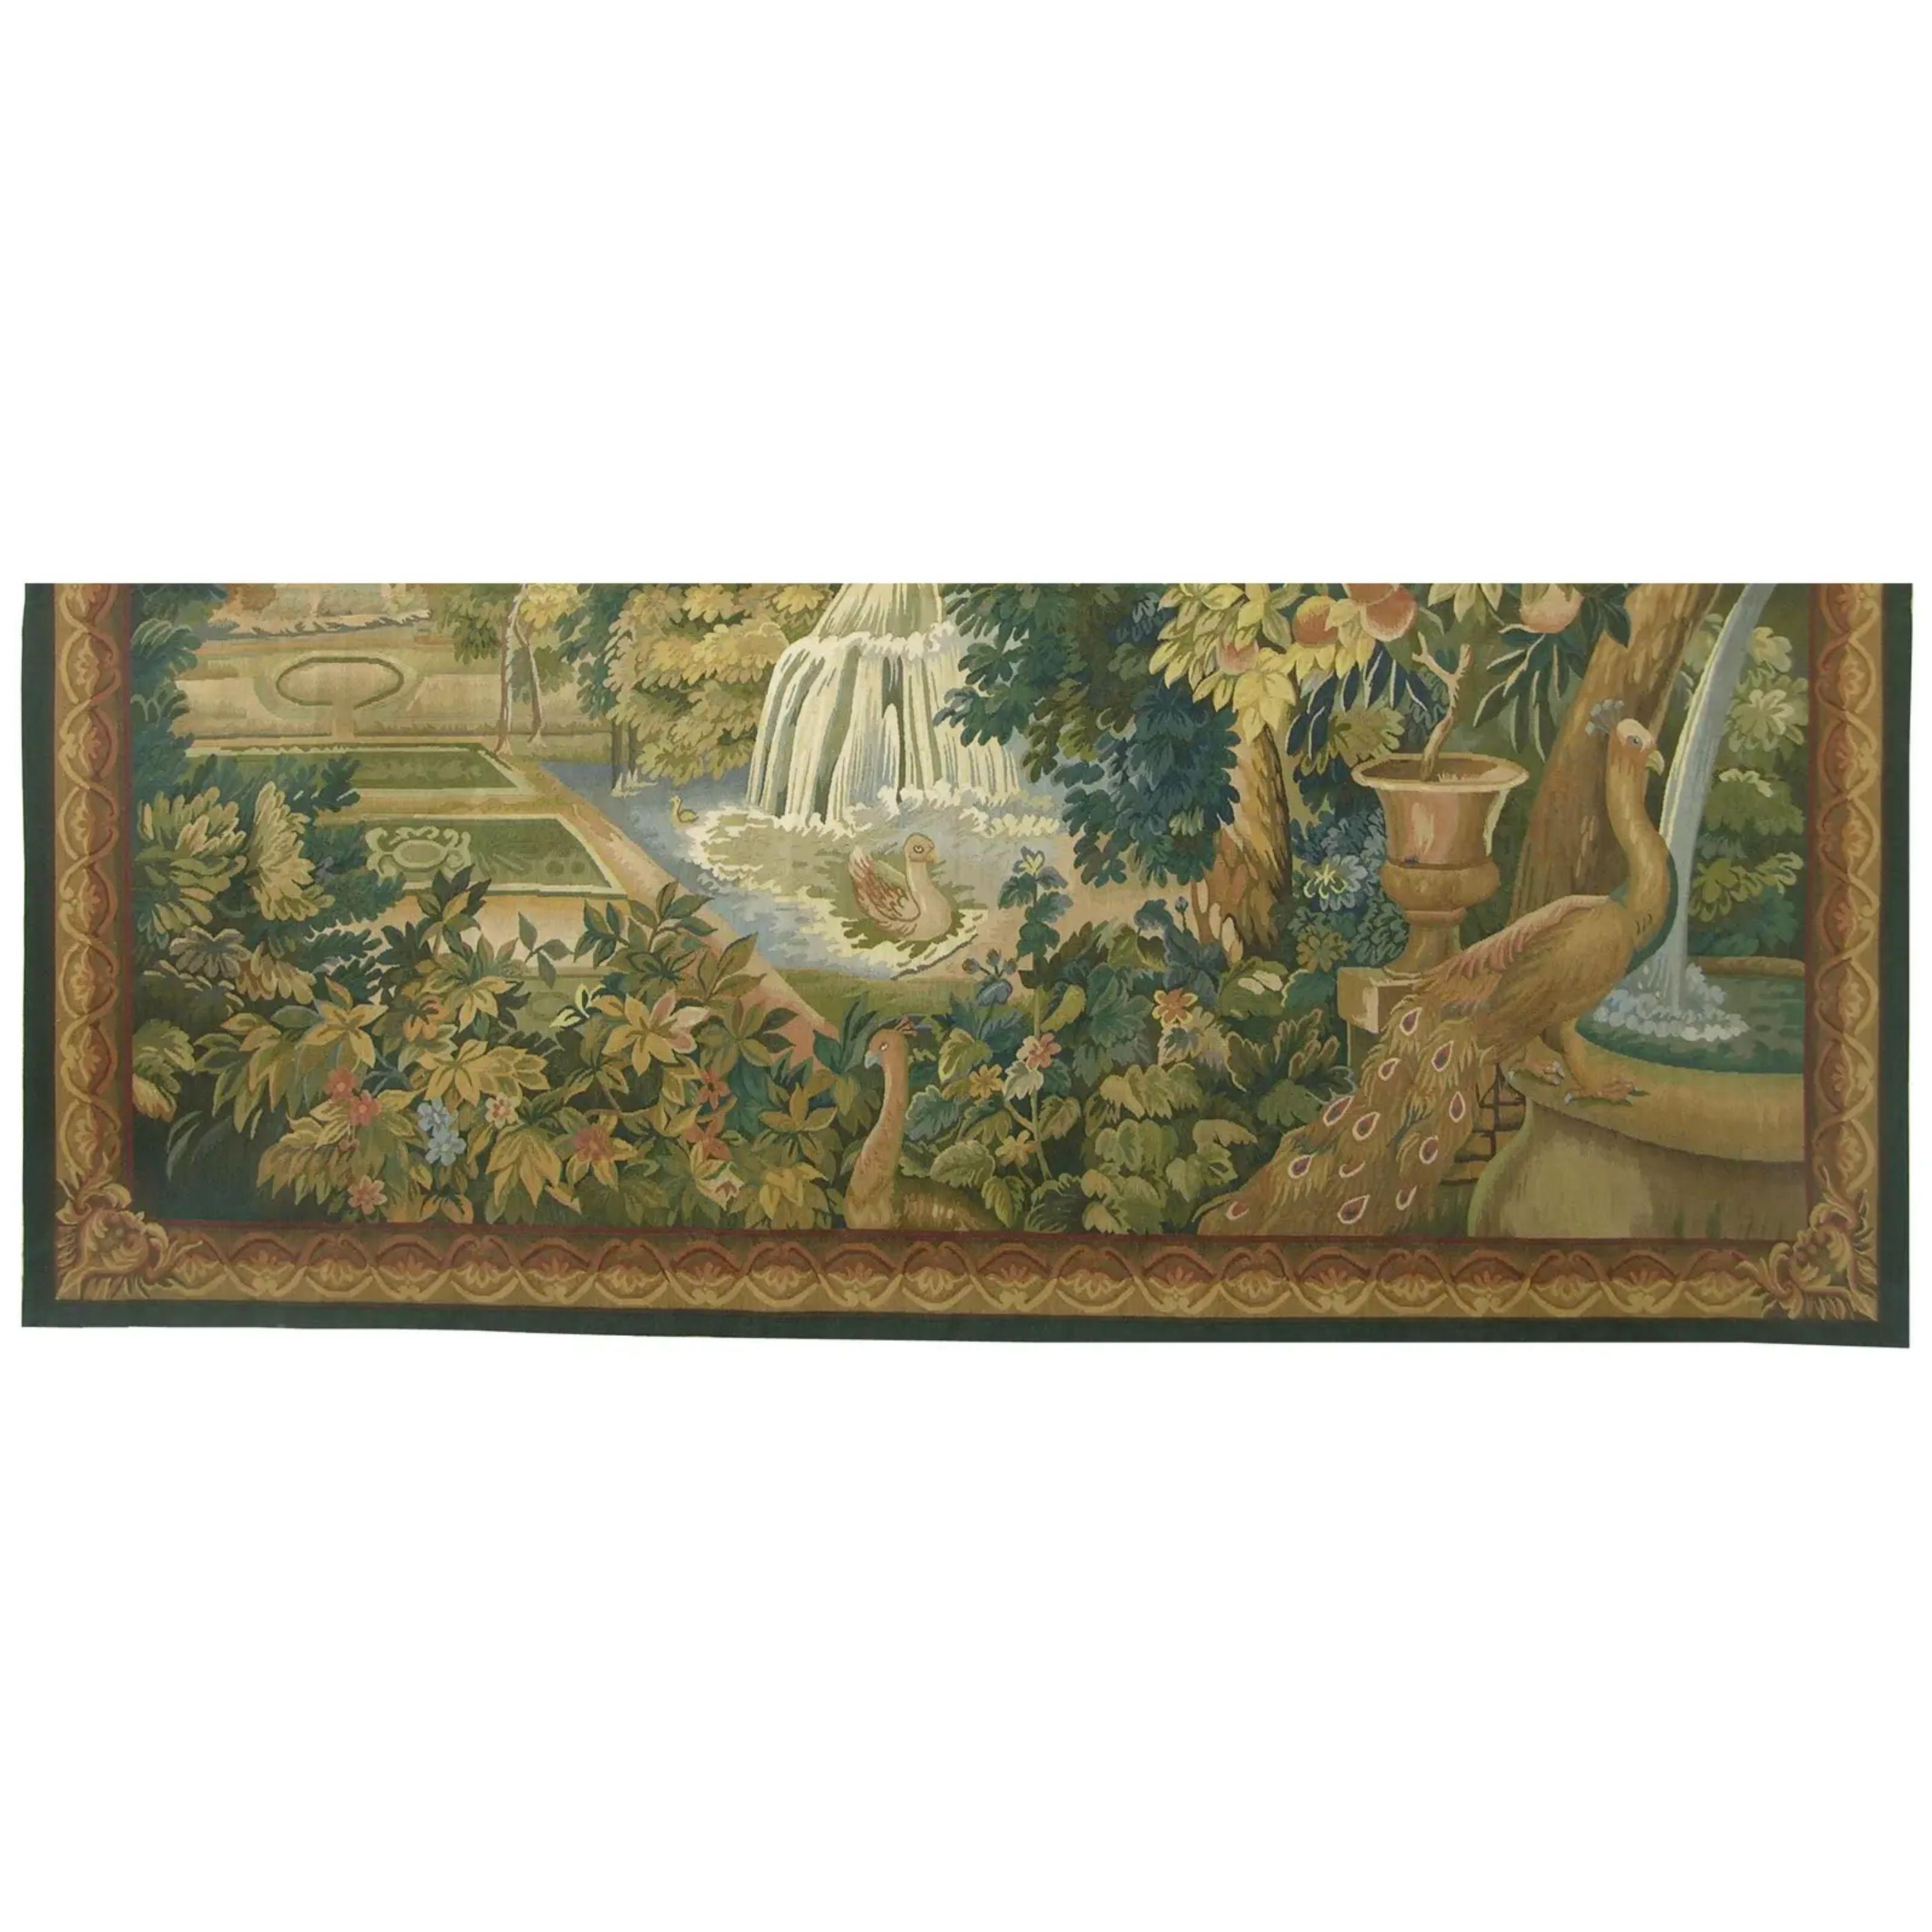 Unknown Vintage Tapestry Depicting A Secret Garden 6.5X6.1 For Sale